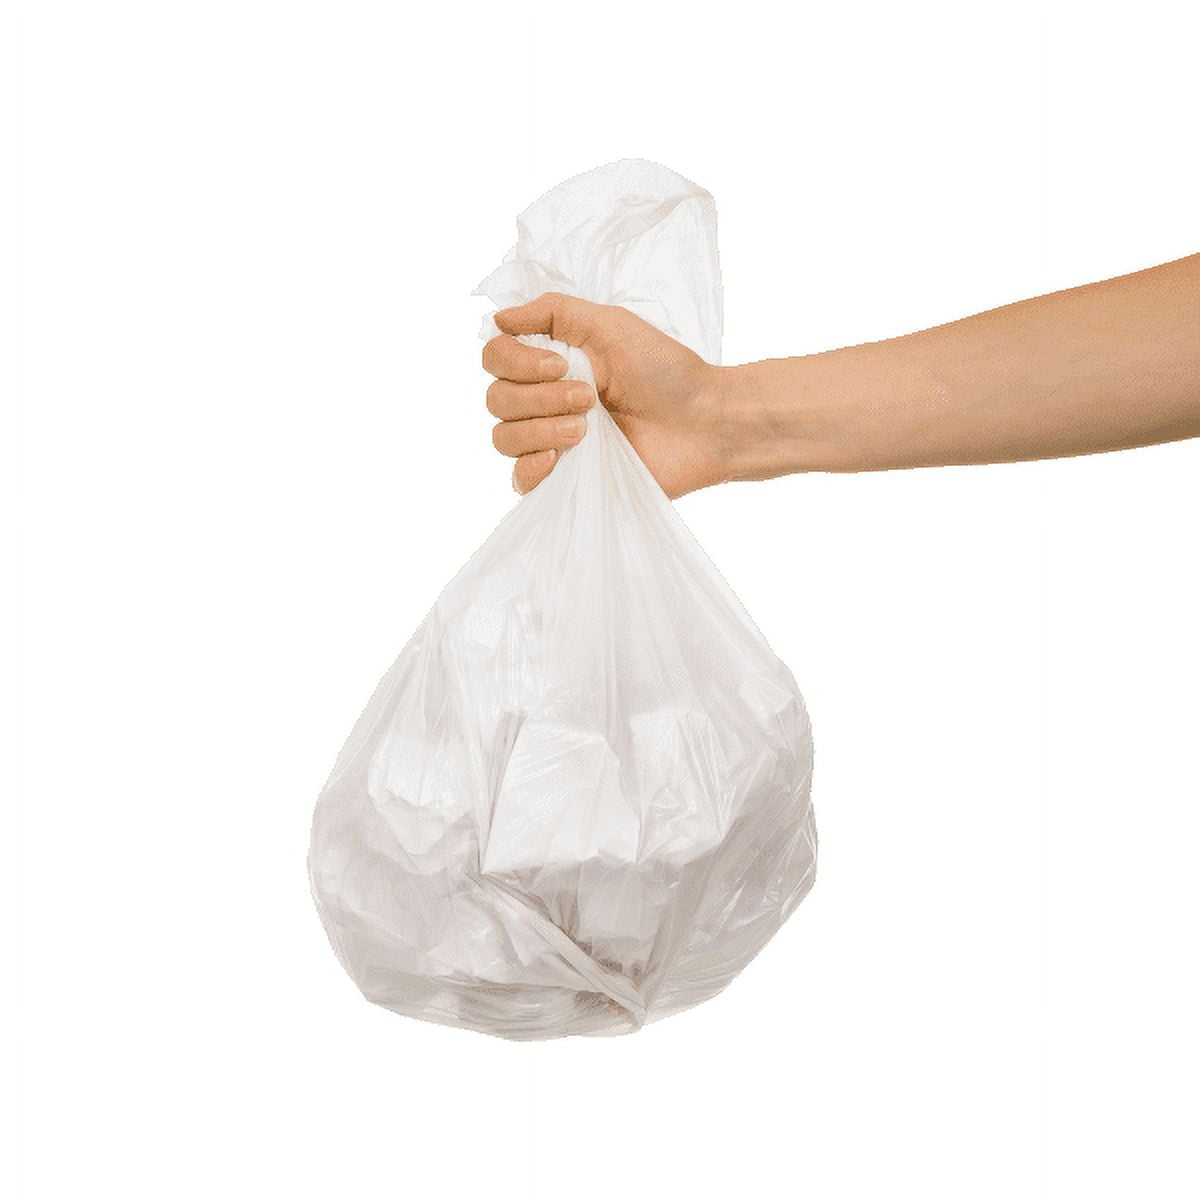 7-10 Gallon Clear Trash Can Liners, 250 Count - 24 x 24 High Density  Trash Bin Bags for Lightweight Garbage - Wastepaper Basket Bin Liners,  Shredder